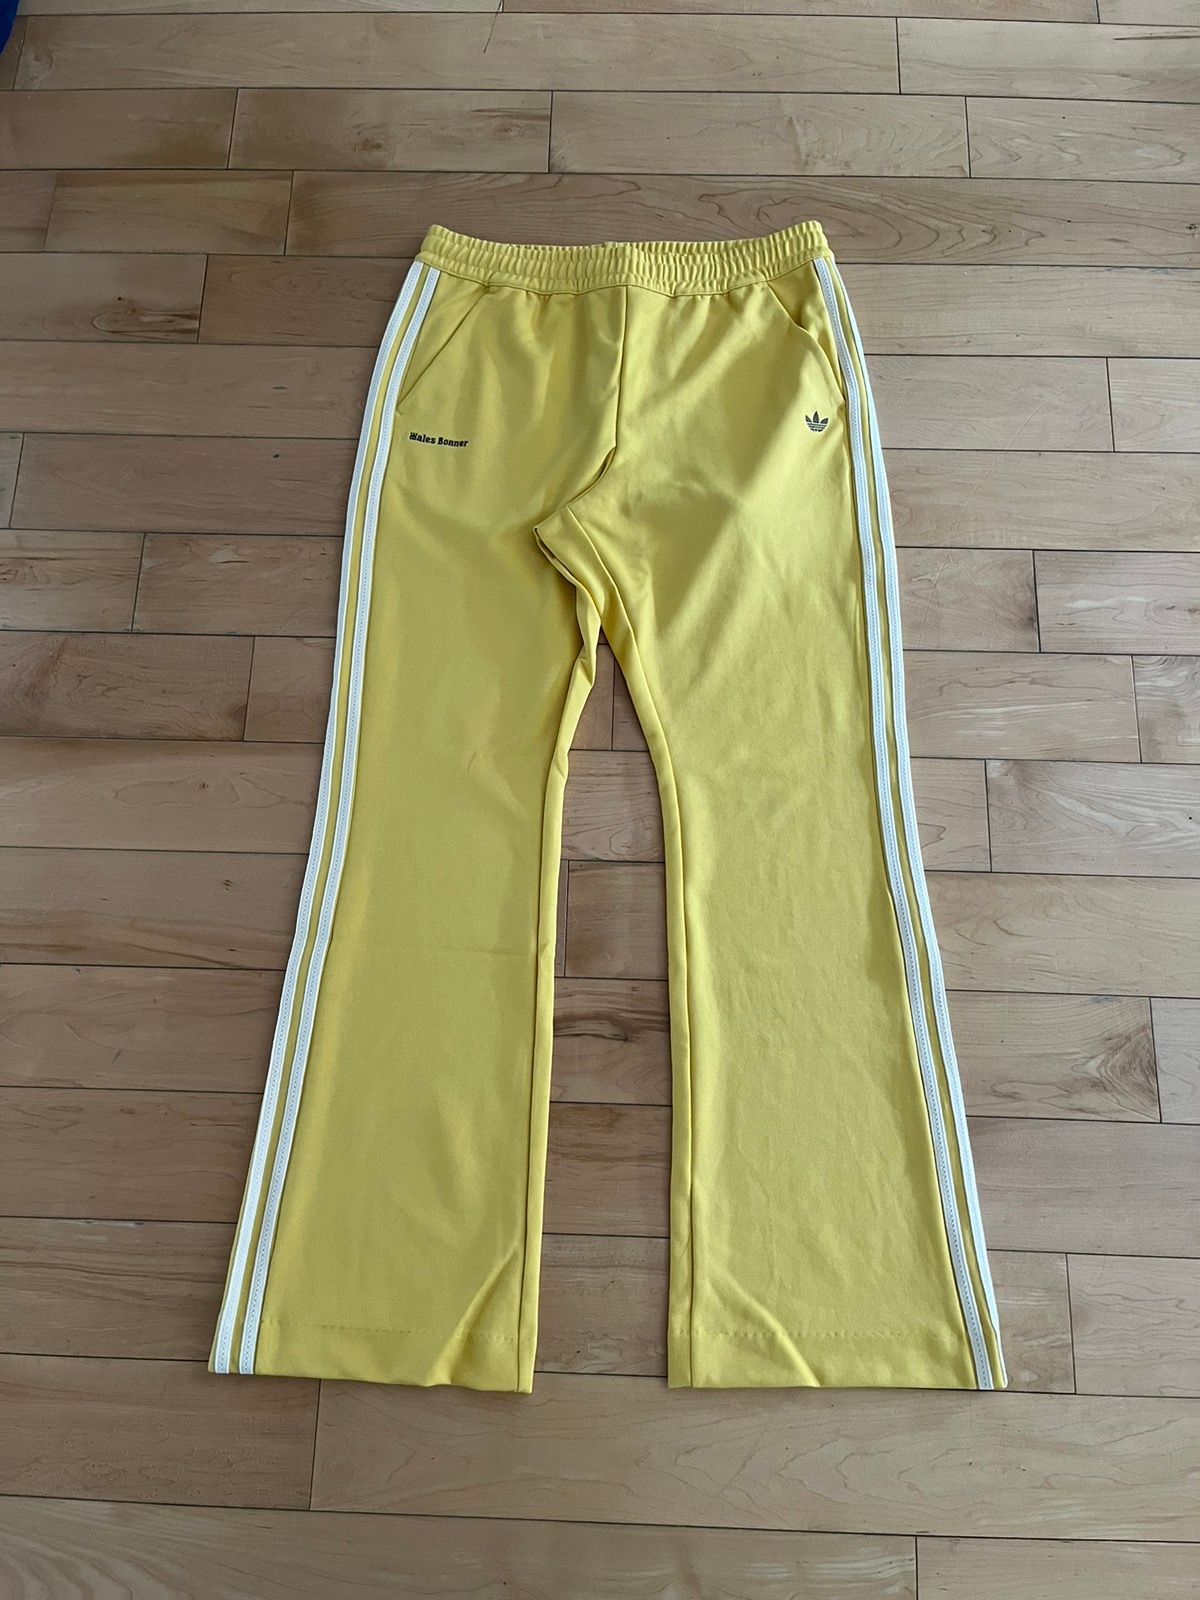 NWT - Wales Bonner x Adidas Yellow Sweatpants - 1